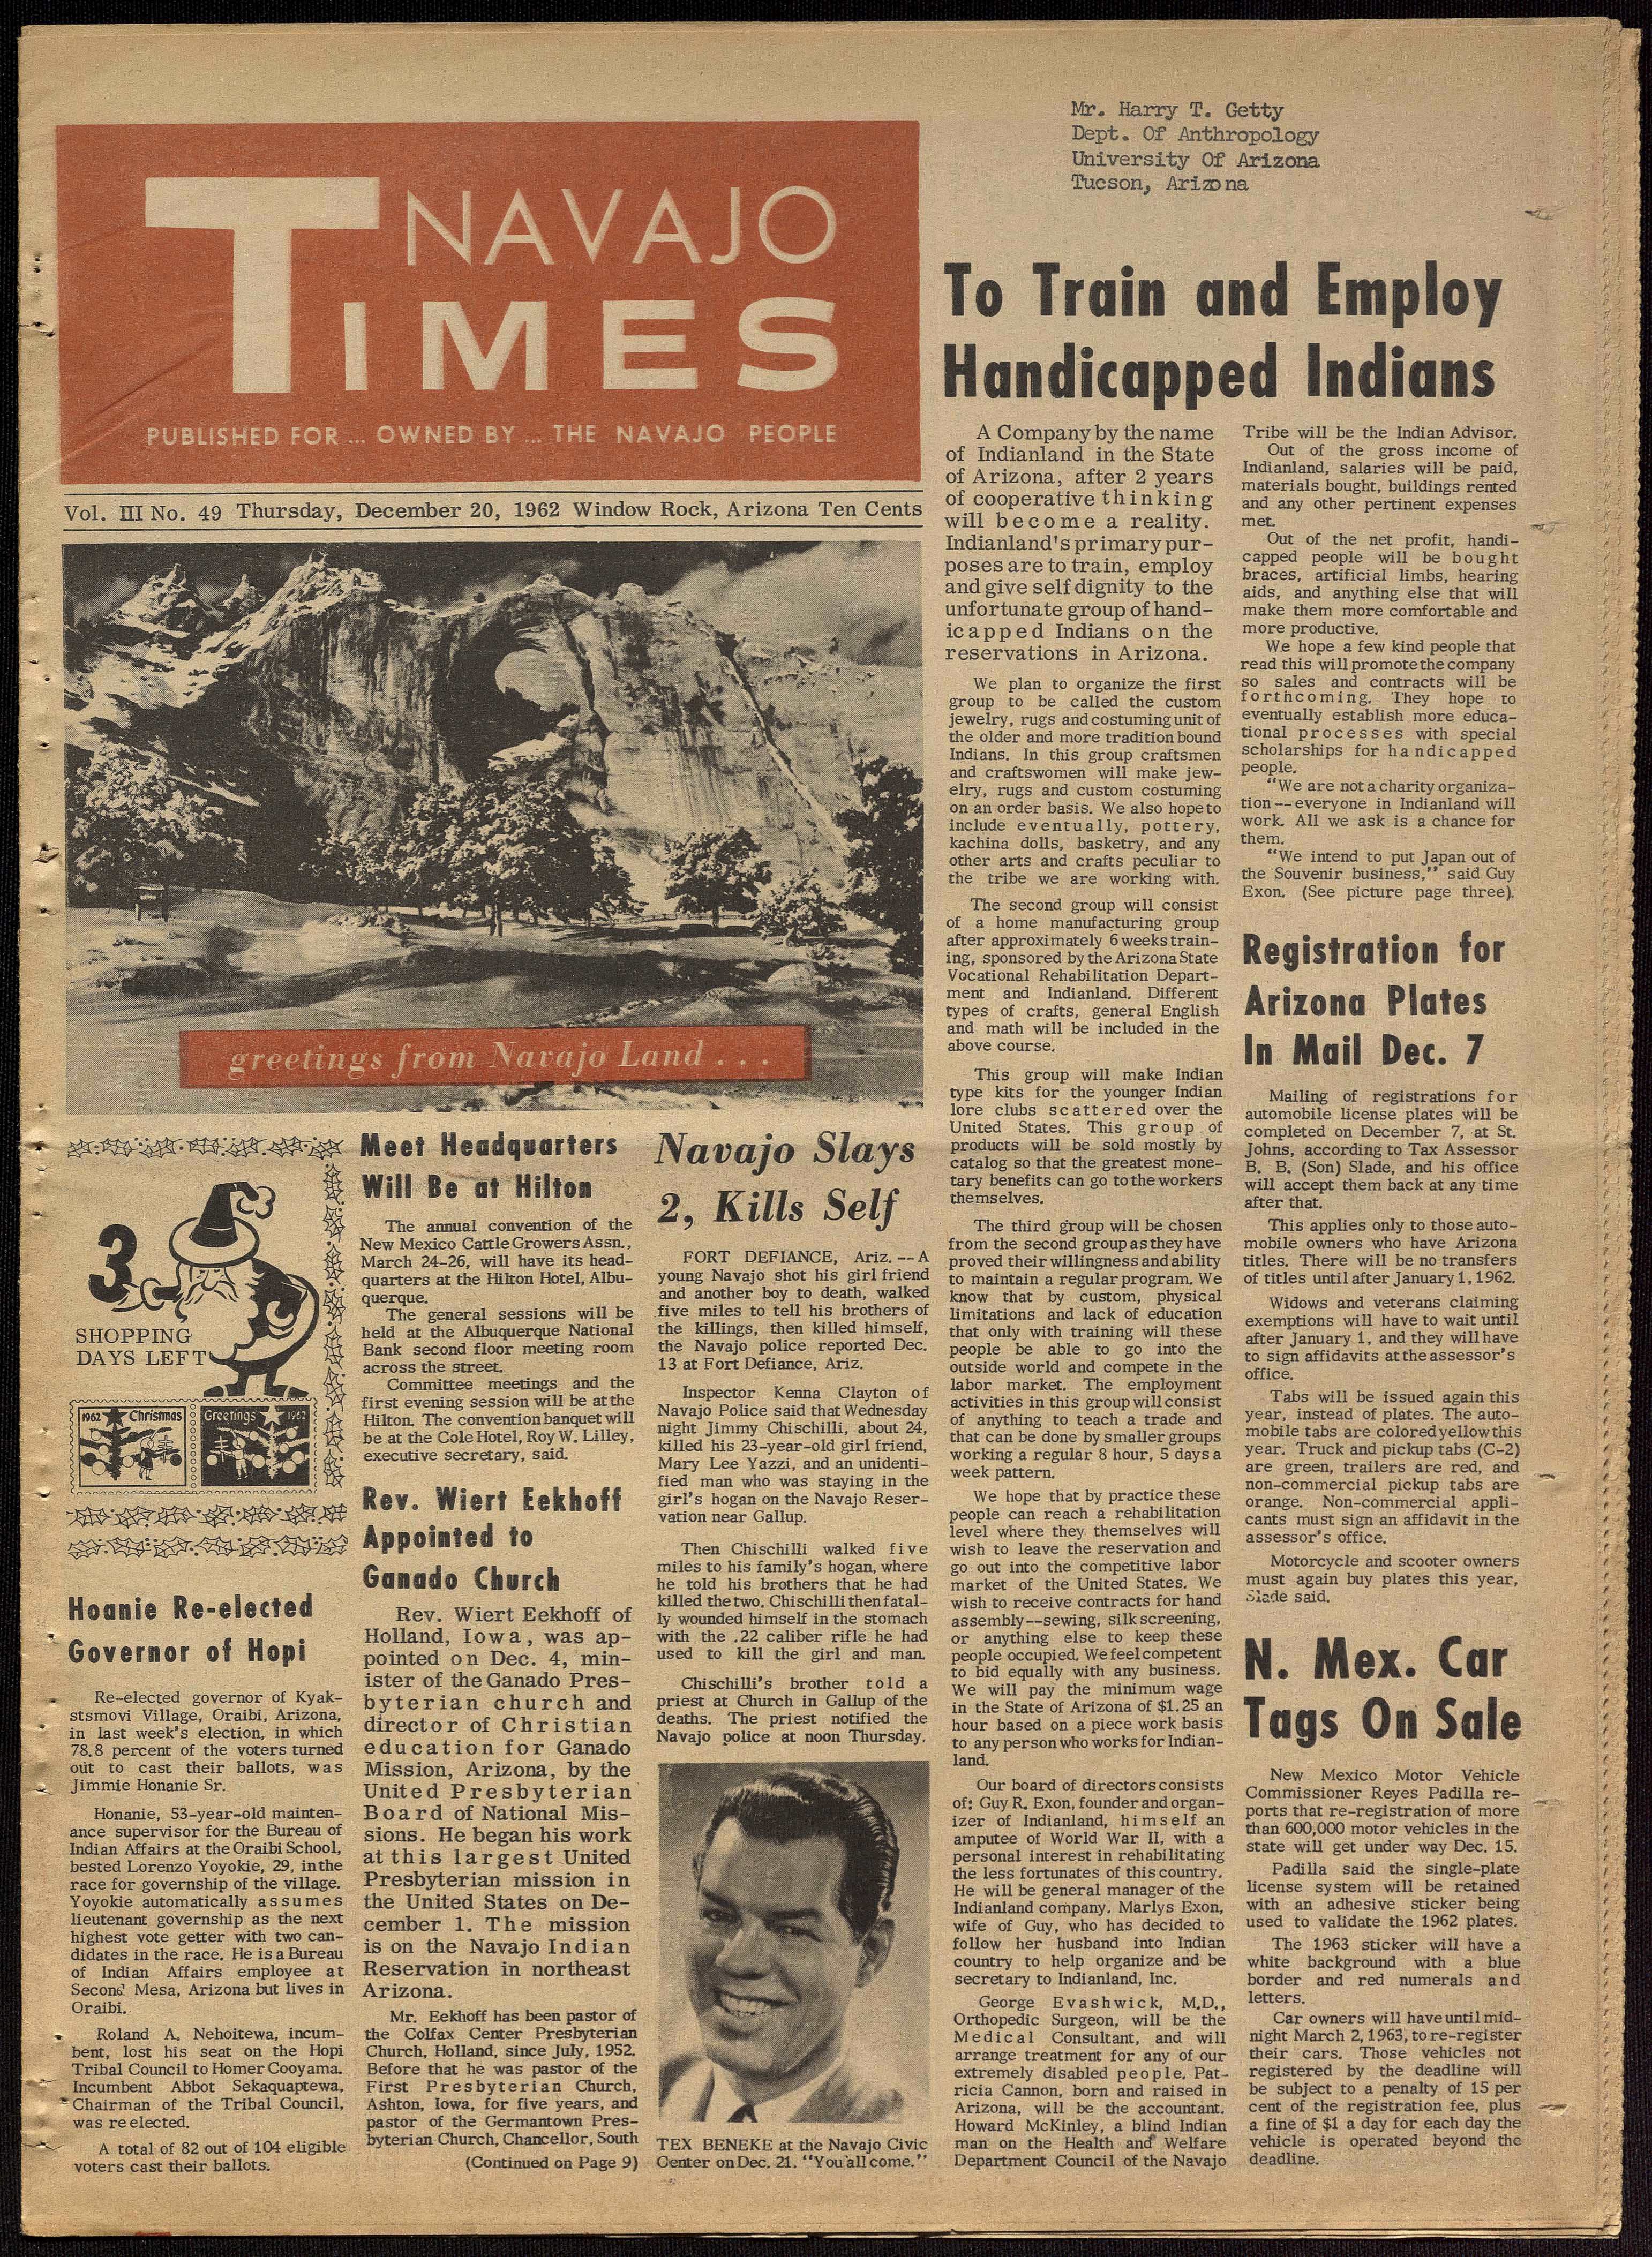 
Navajo Times, December 20 1962